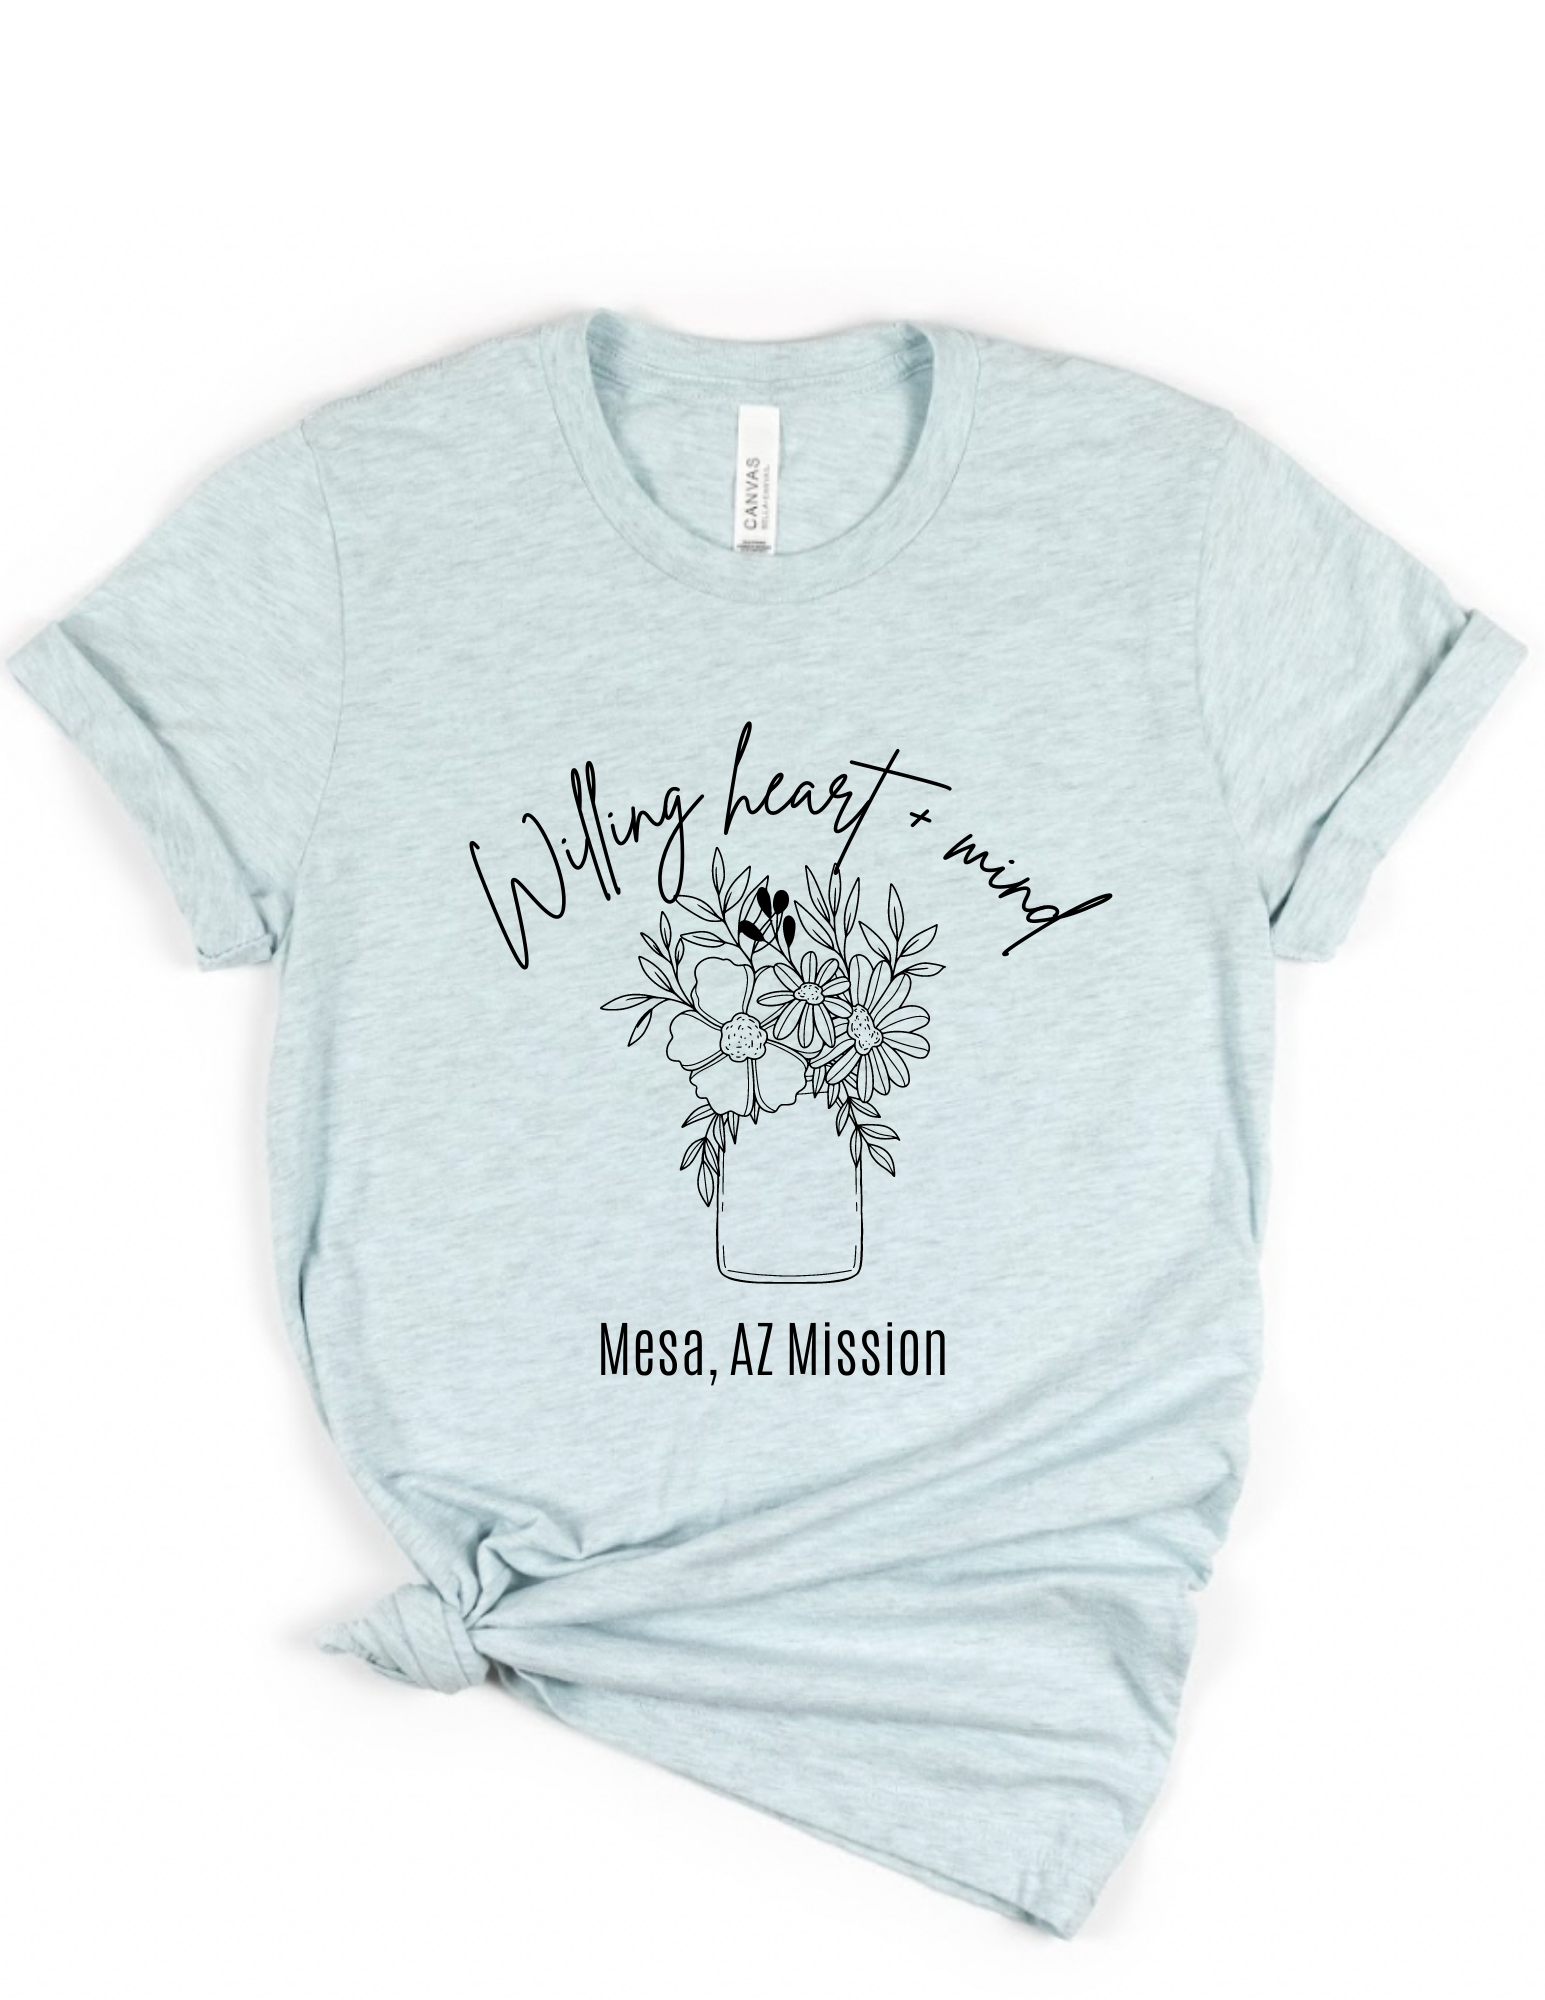 – Heart Uplift Mission + Custom Wear Name & Mind T-Shirt Willing